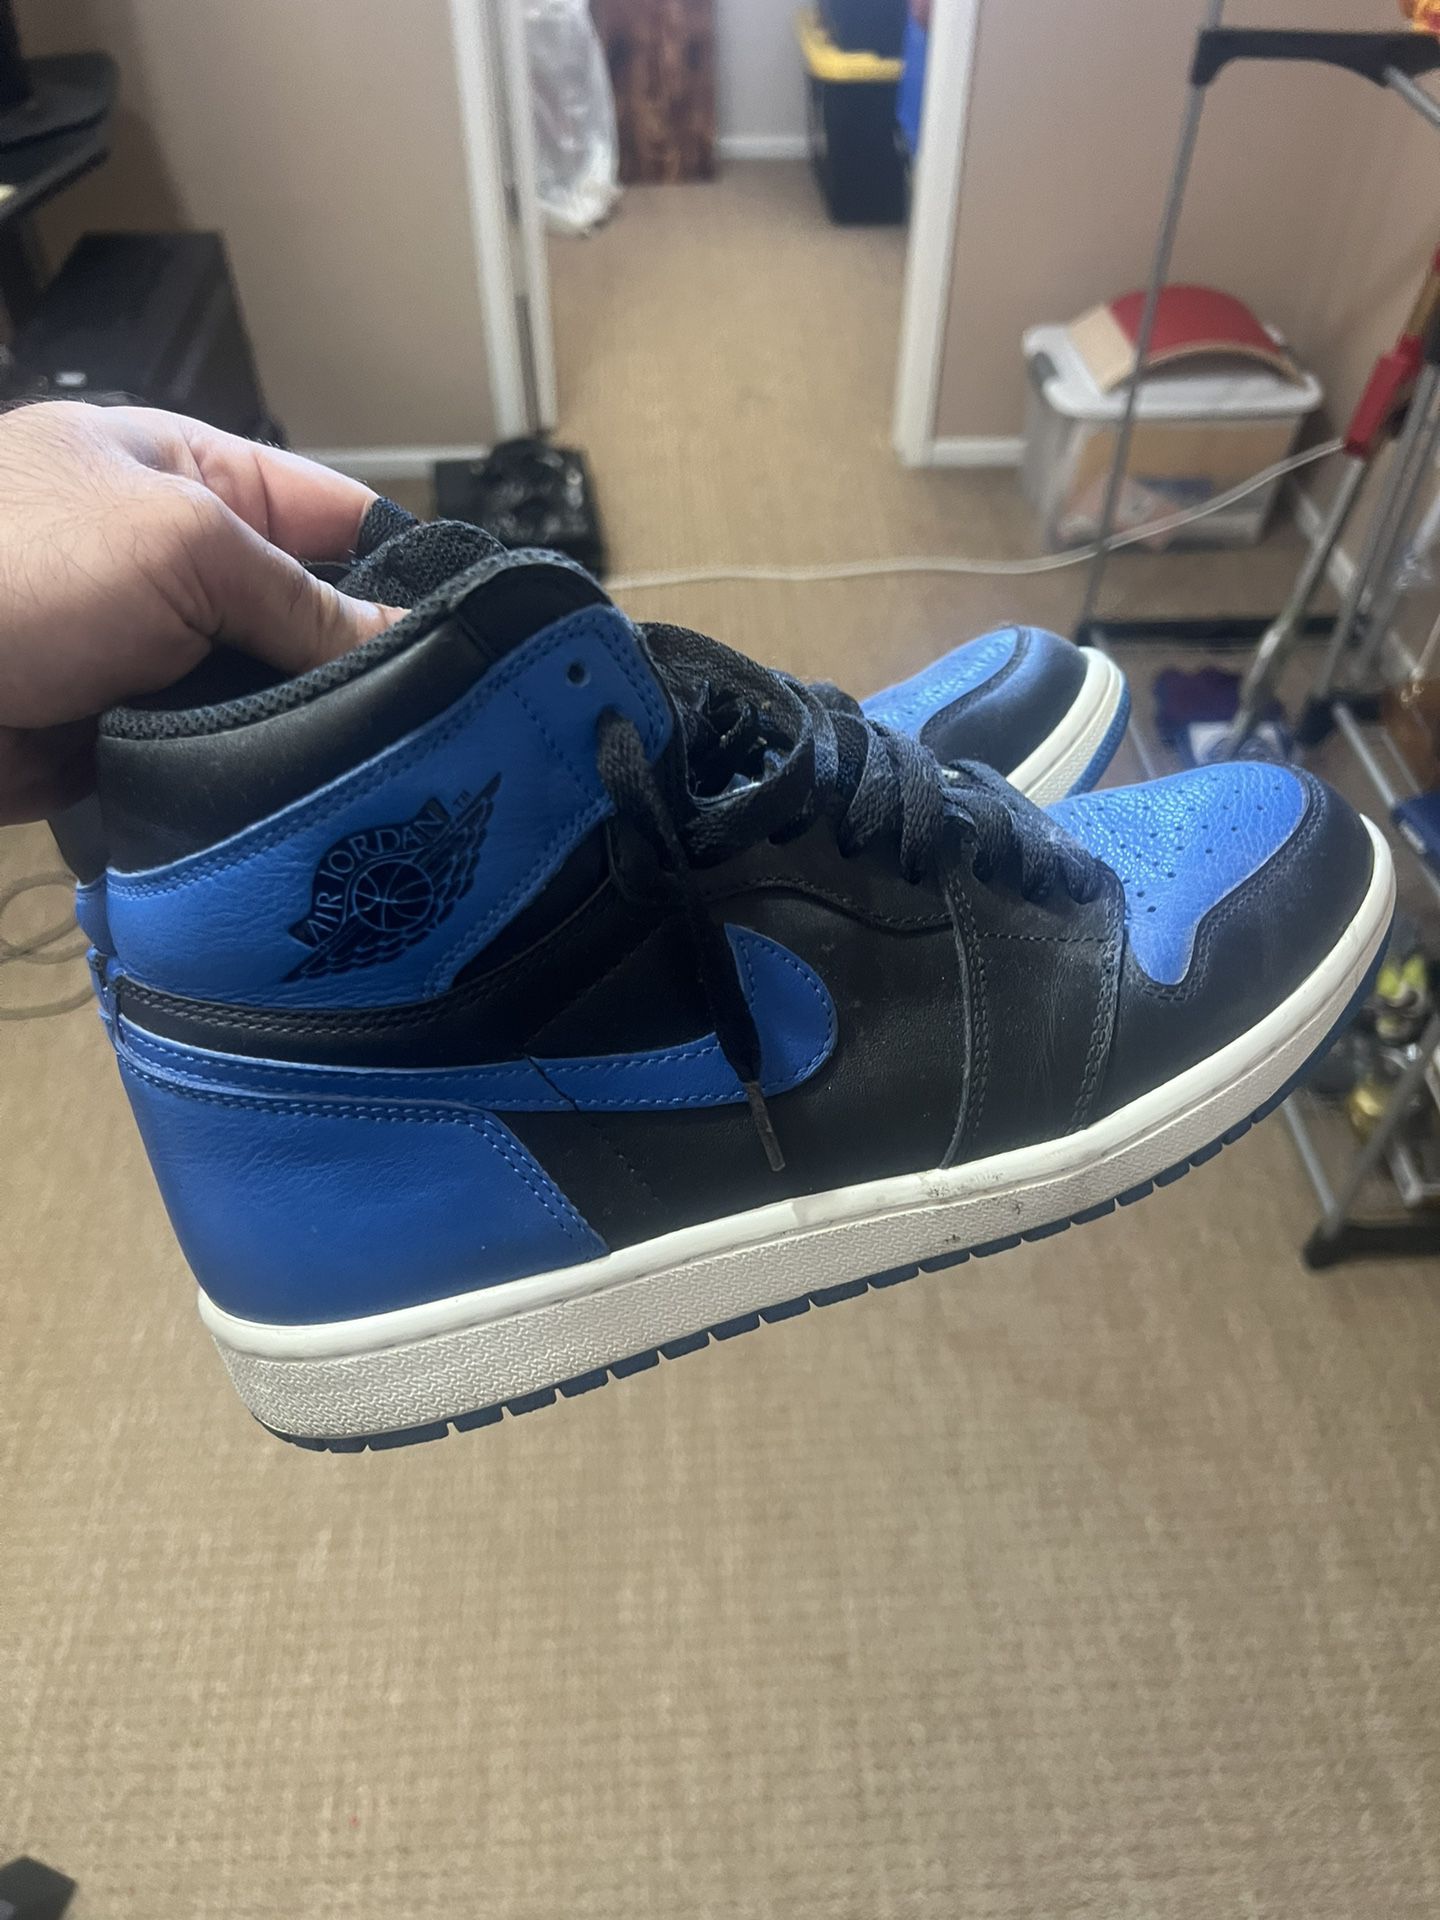 Jordan 1 Royal Blue Size 10